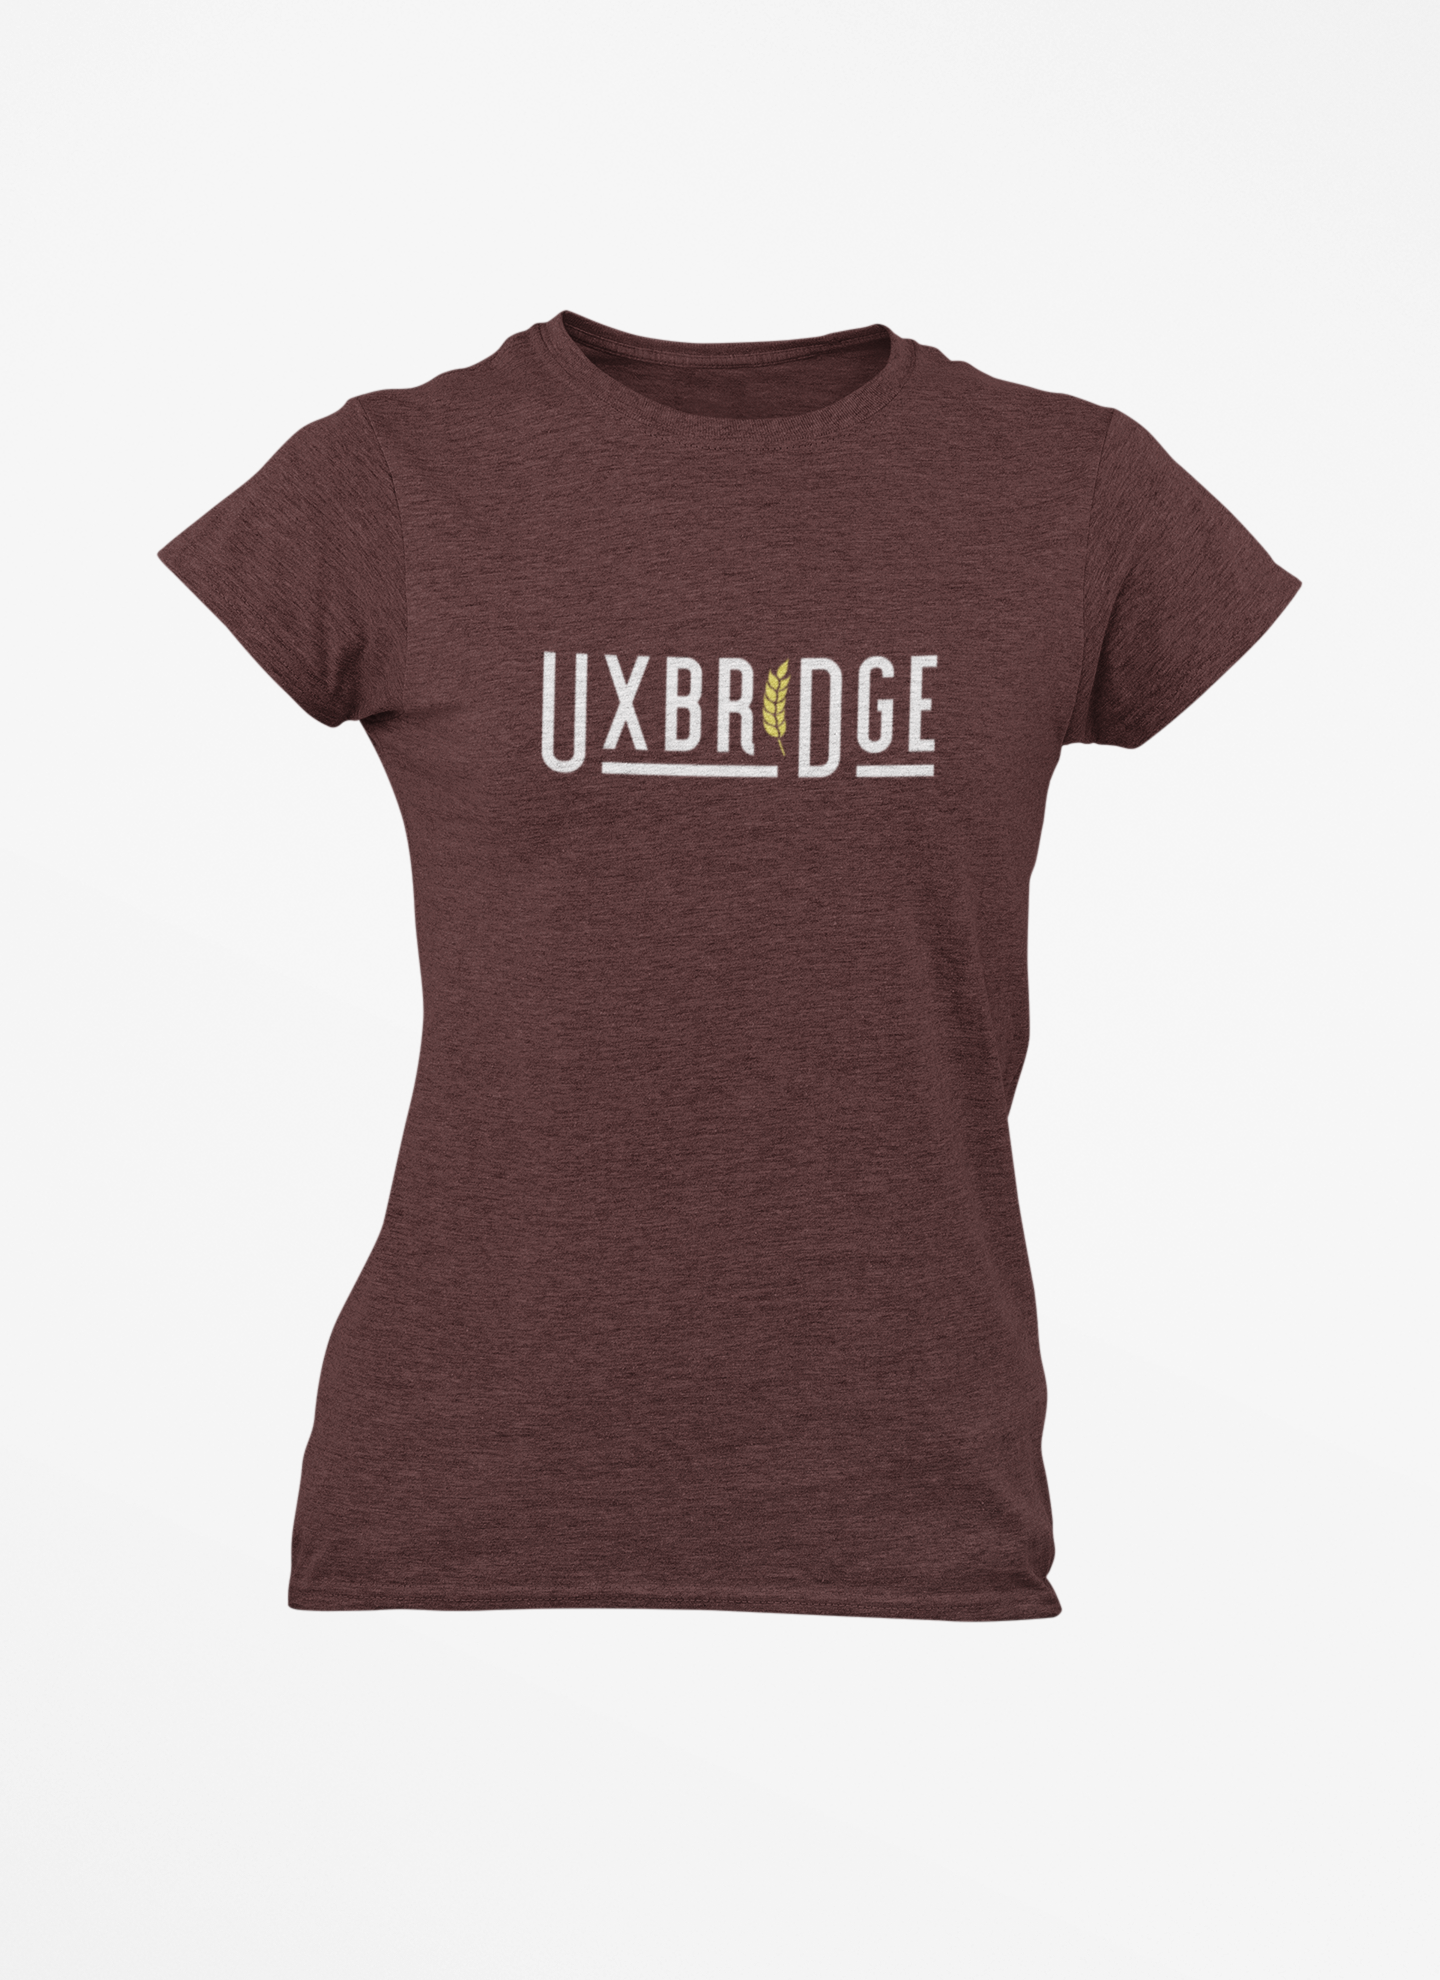 Women's Limited Edition Uxbridge Fall T-shirt